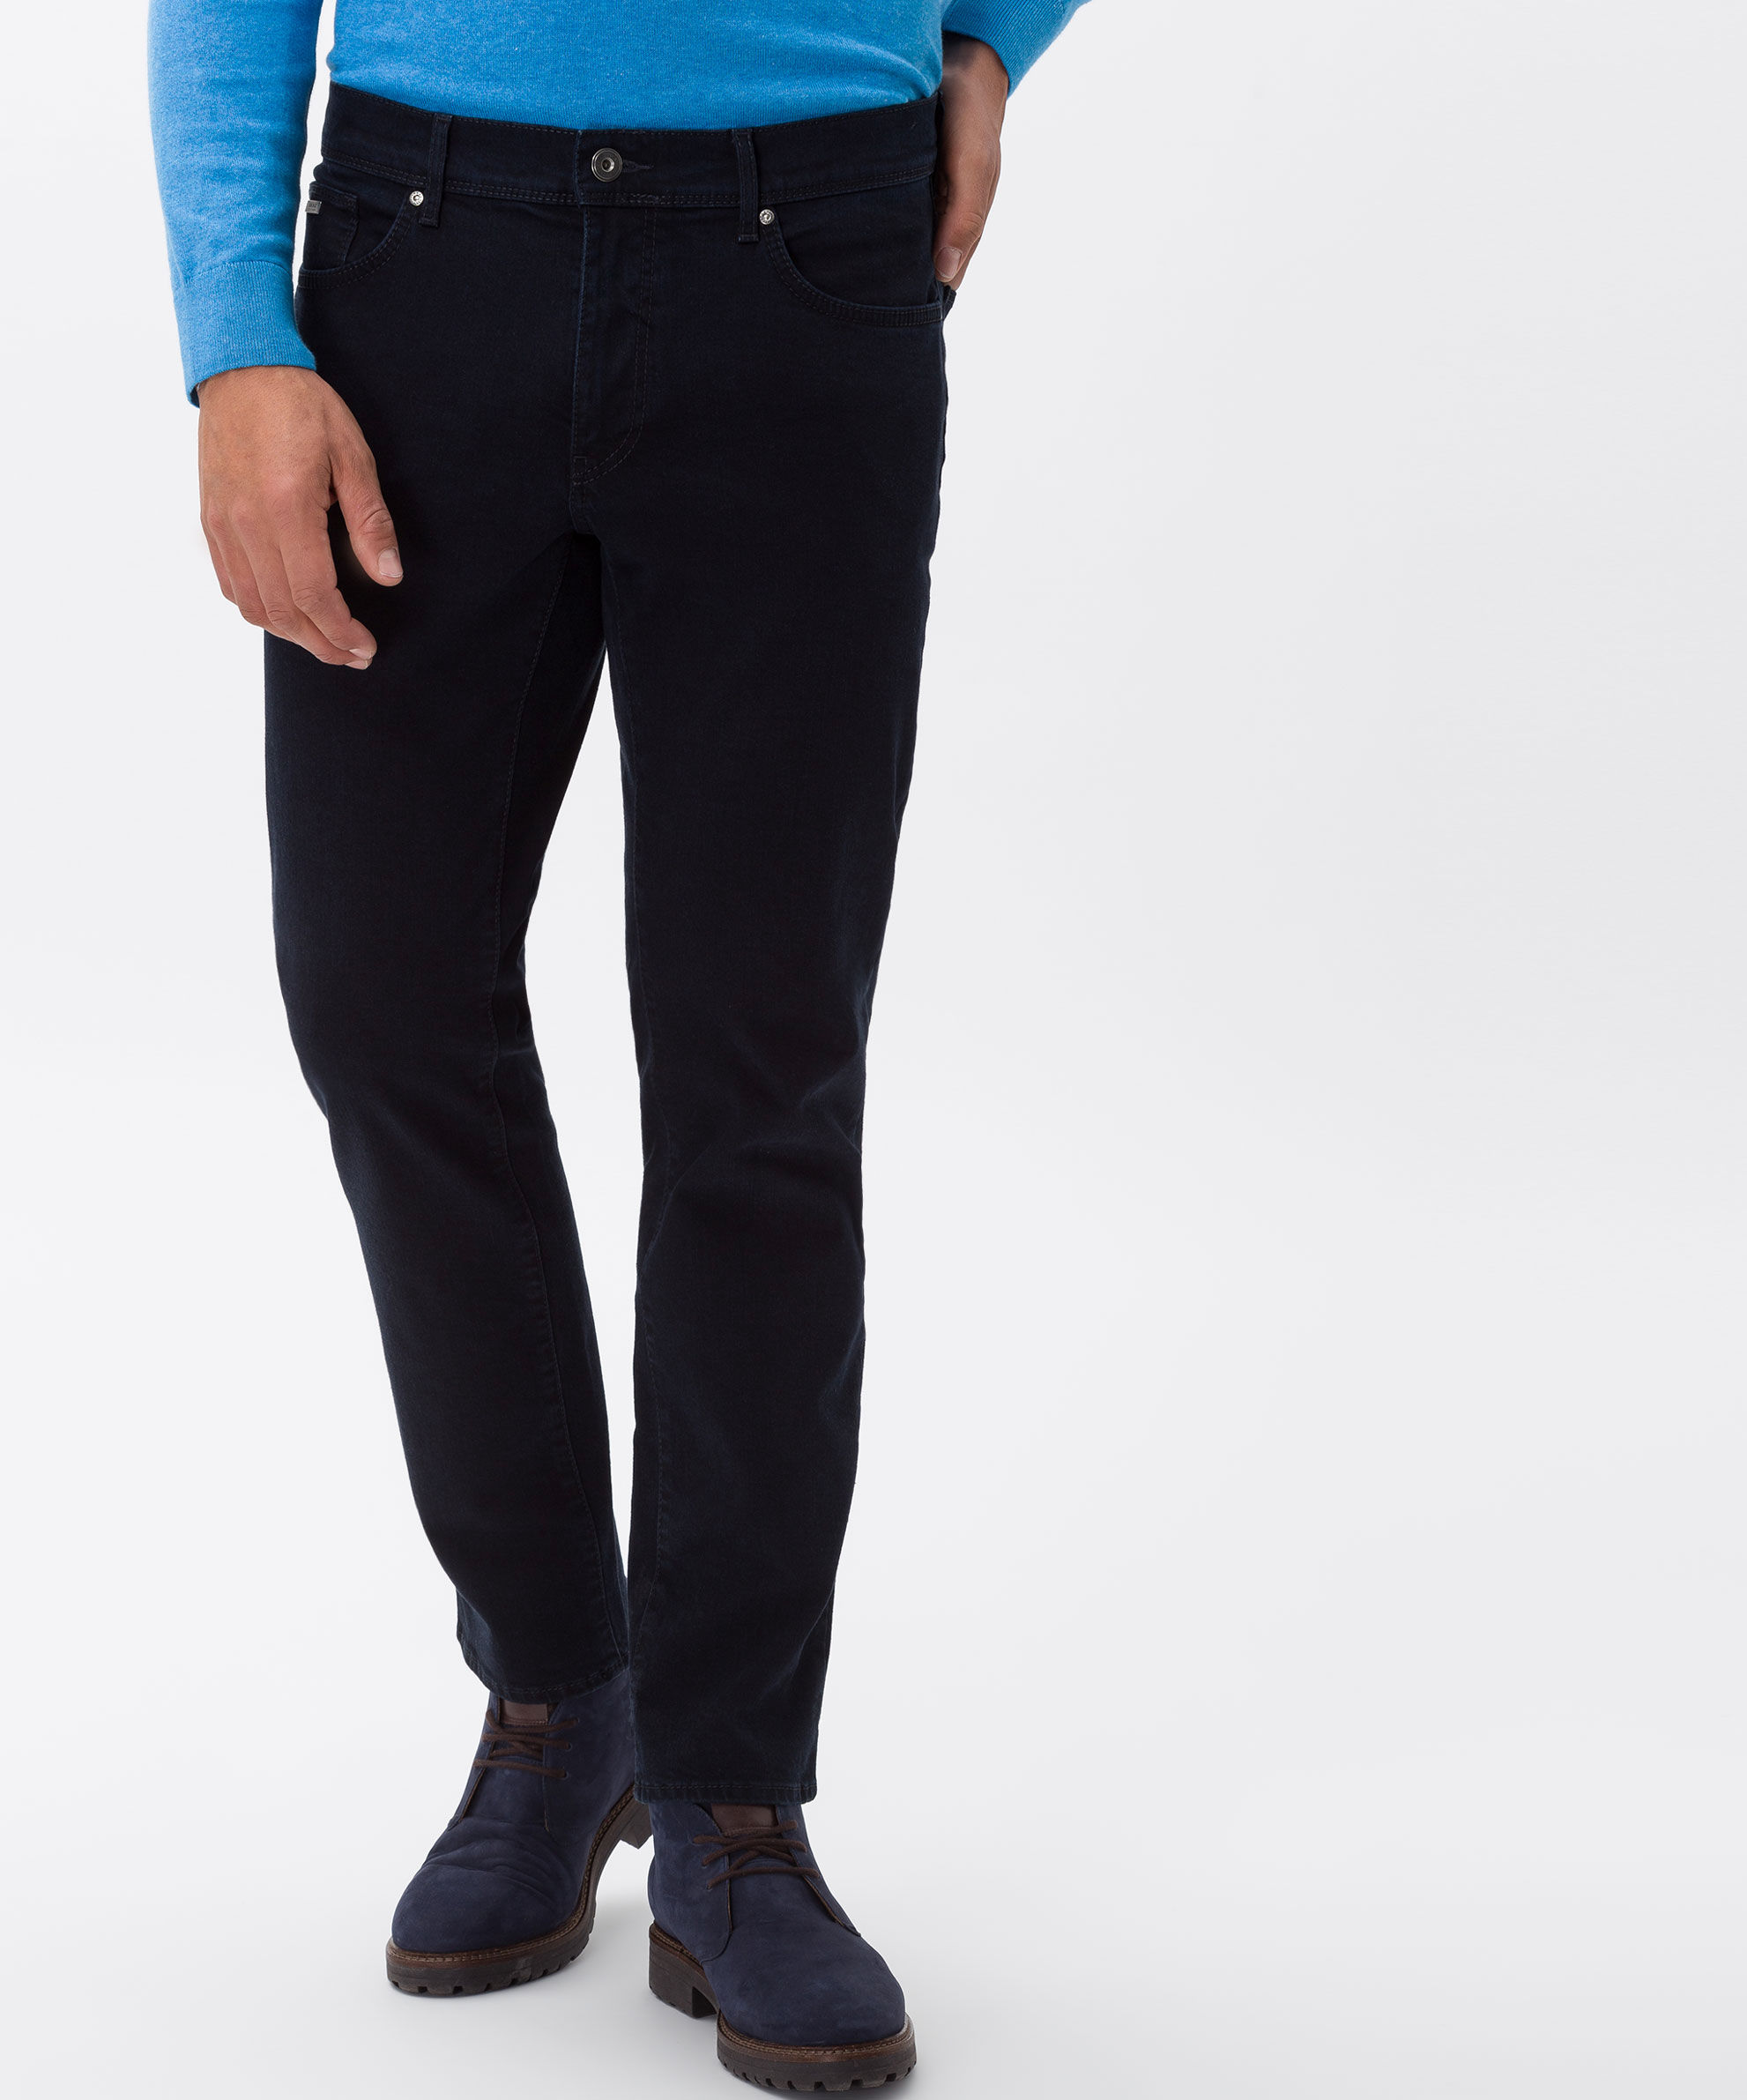 Brax Herren Jeans Hose Five Pocket Style Cadiz dunkelblau 80 0070 07960720 22